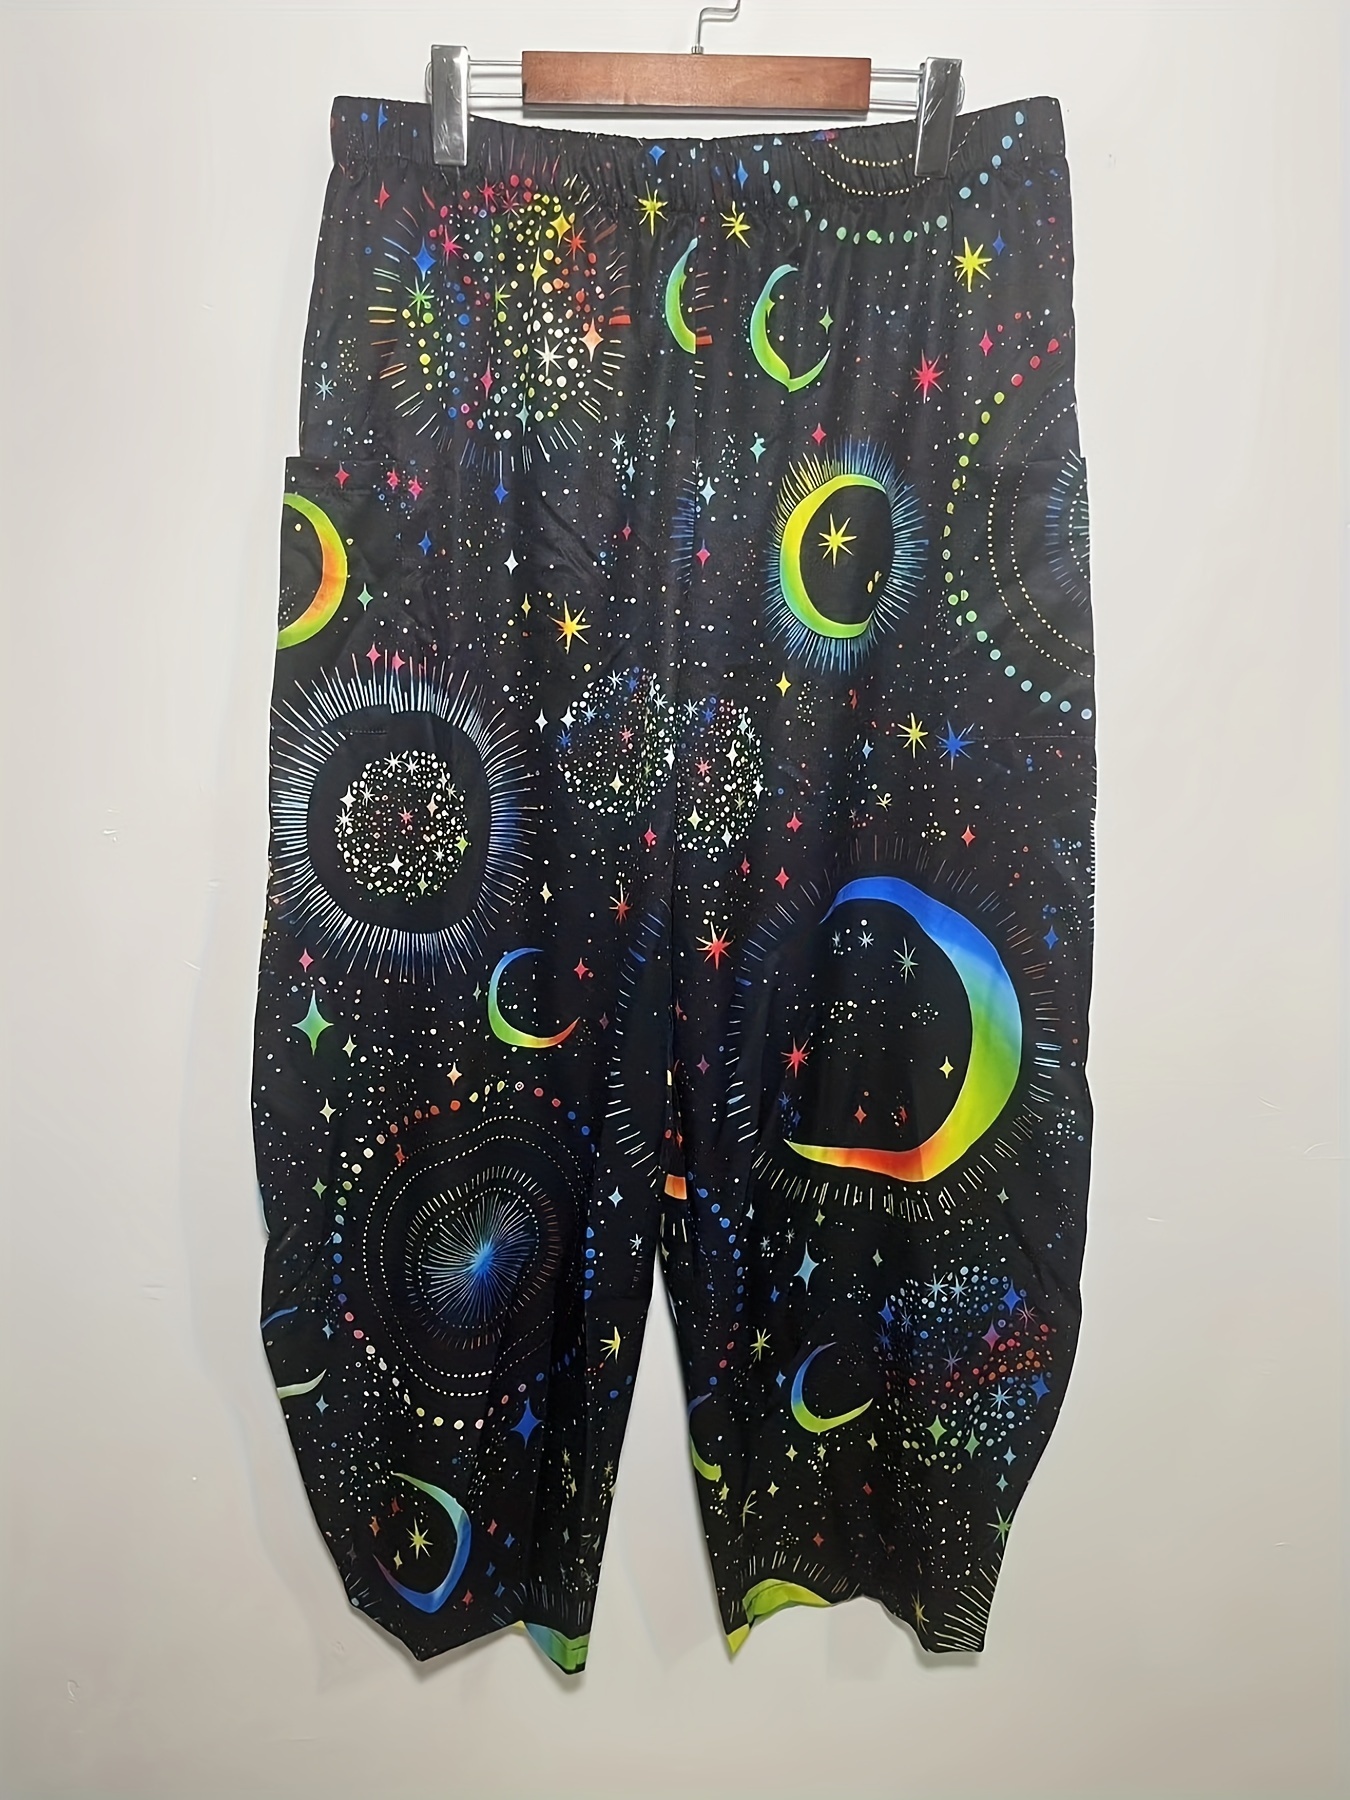 Womens Moon Star Print Pants Trousers Elastic High Waist Slim Fit Long Flare